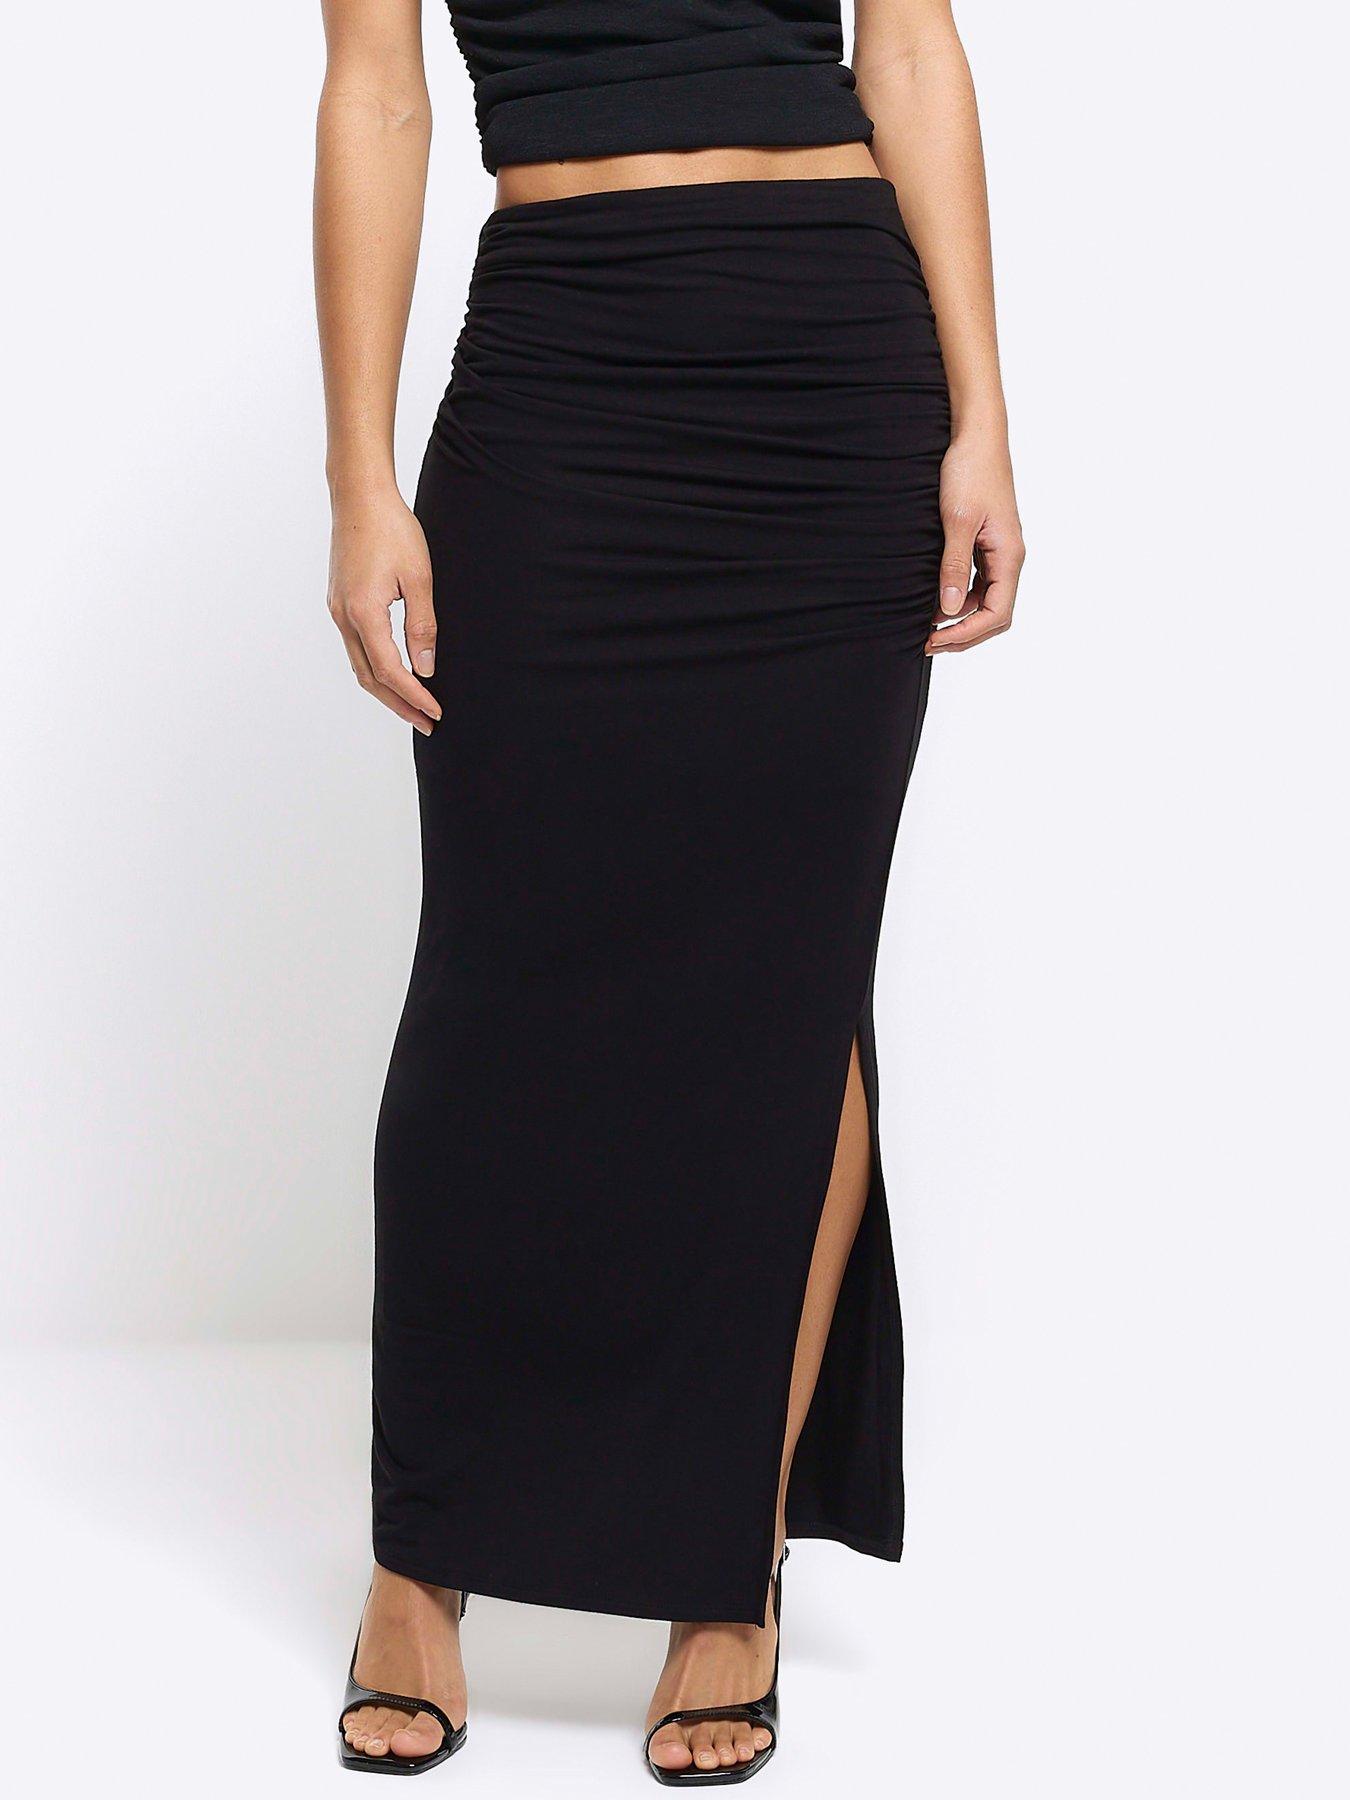 Fashion Women's High Waist Black Short Skirt With Slit @ Best Price Online  | Jumia Egypt